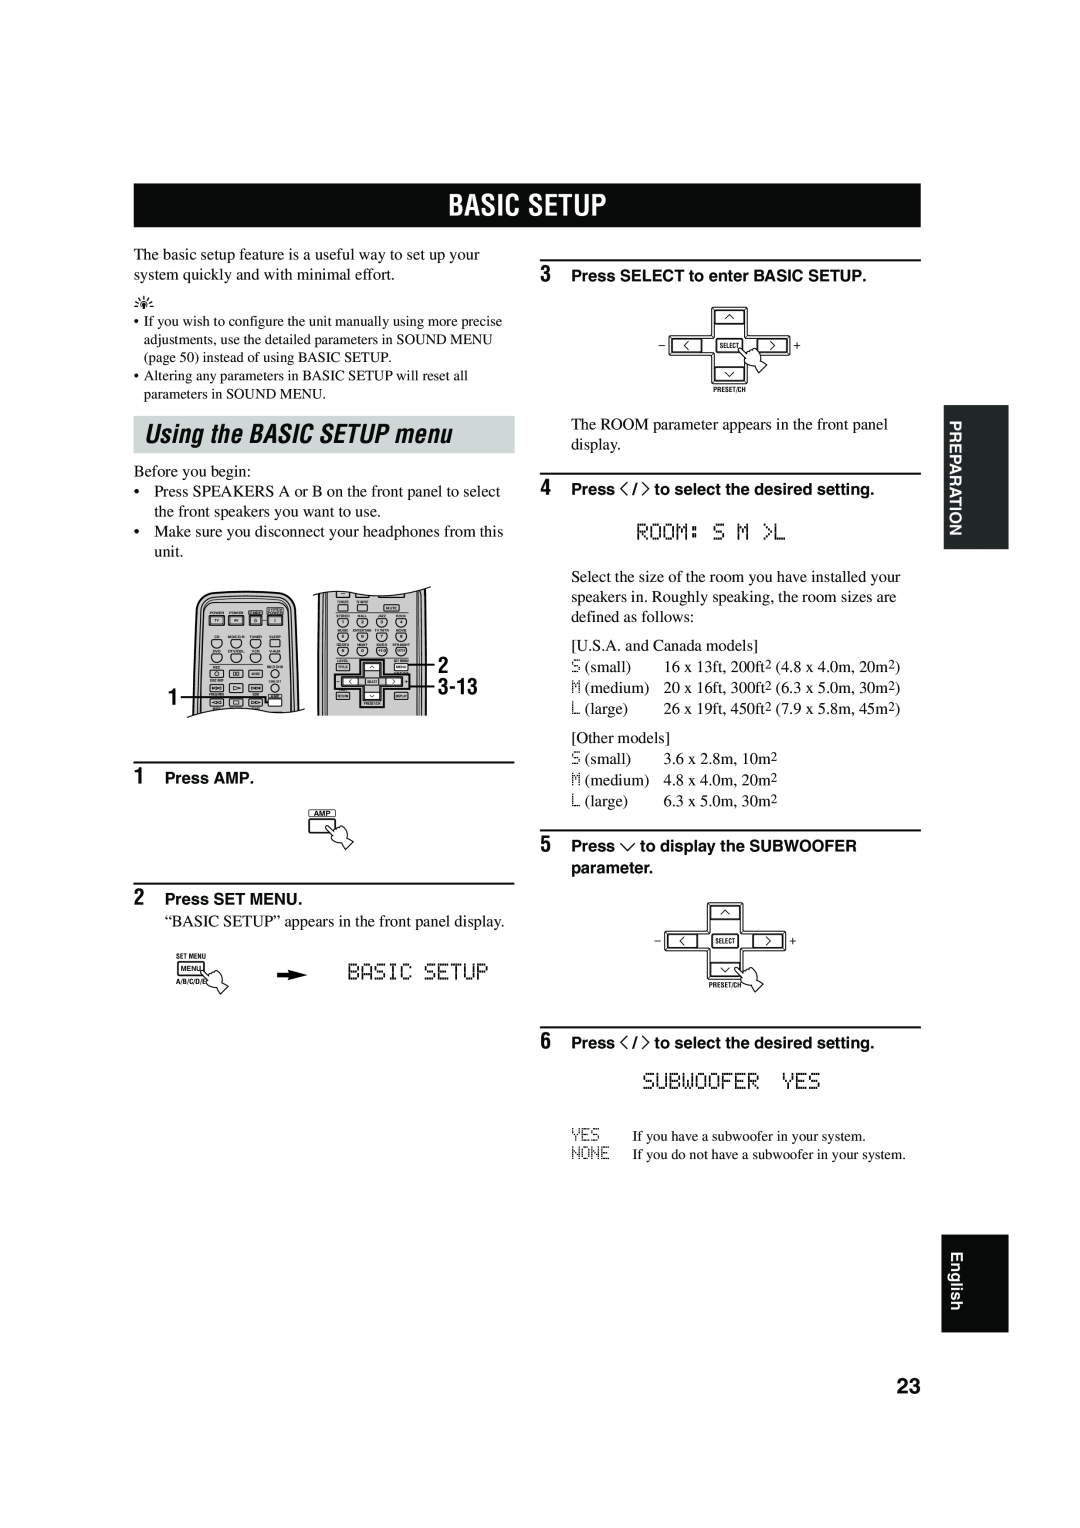 Yamaha RX-V450 Basic Setup, Using the BASIC SETUP menu, Room: S M >L, 2 3-13, Subwoofer Yes, 1Press AMP, 2Press SET MENU 